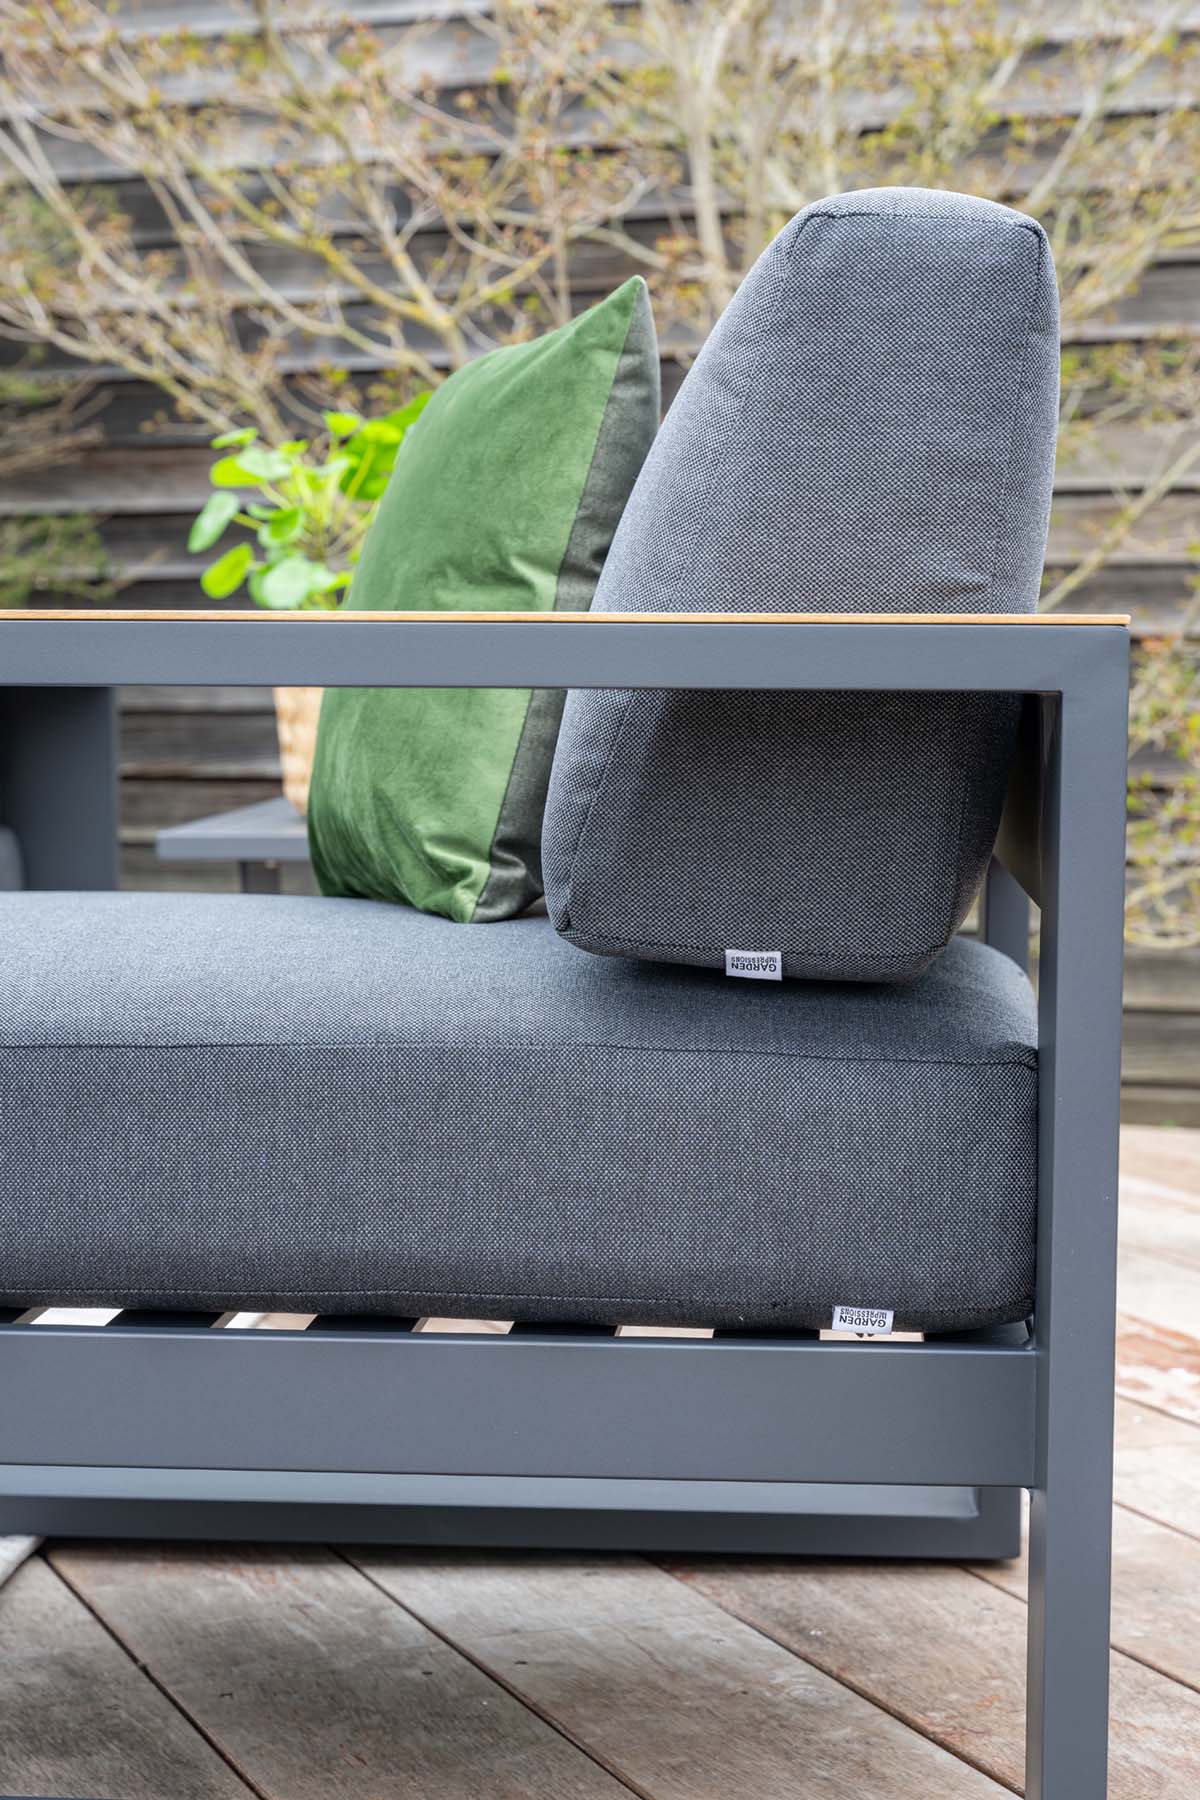 Cube Outdoor Sofa Set | Garden Impressions